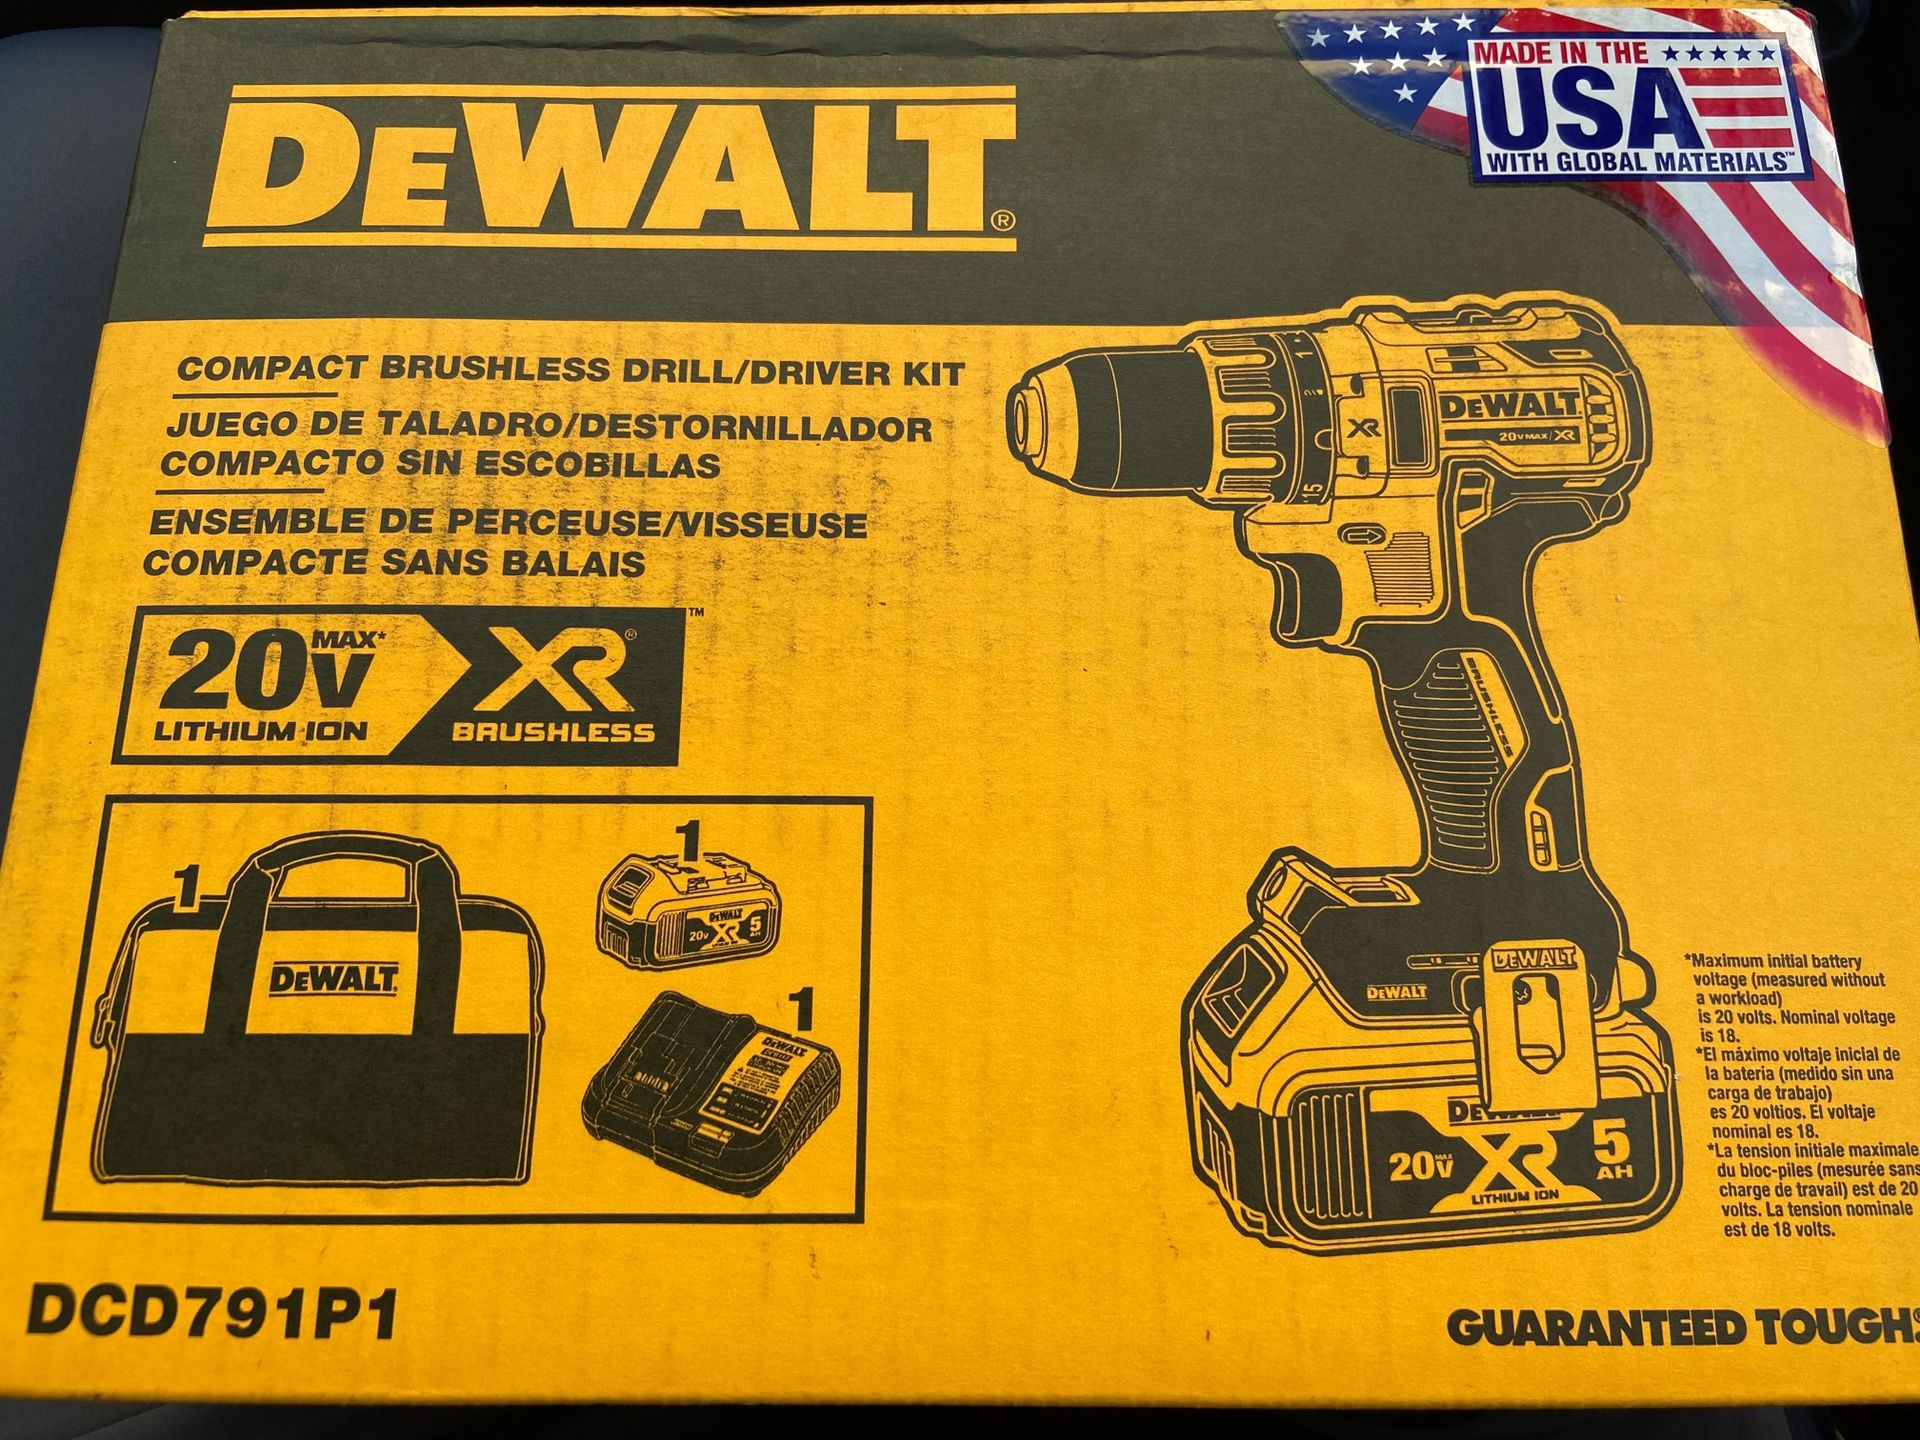 Dewalt compact brushless drill/driver kit